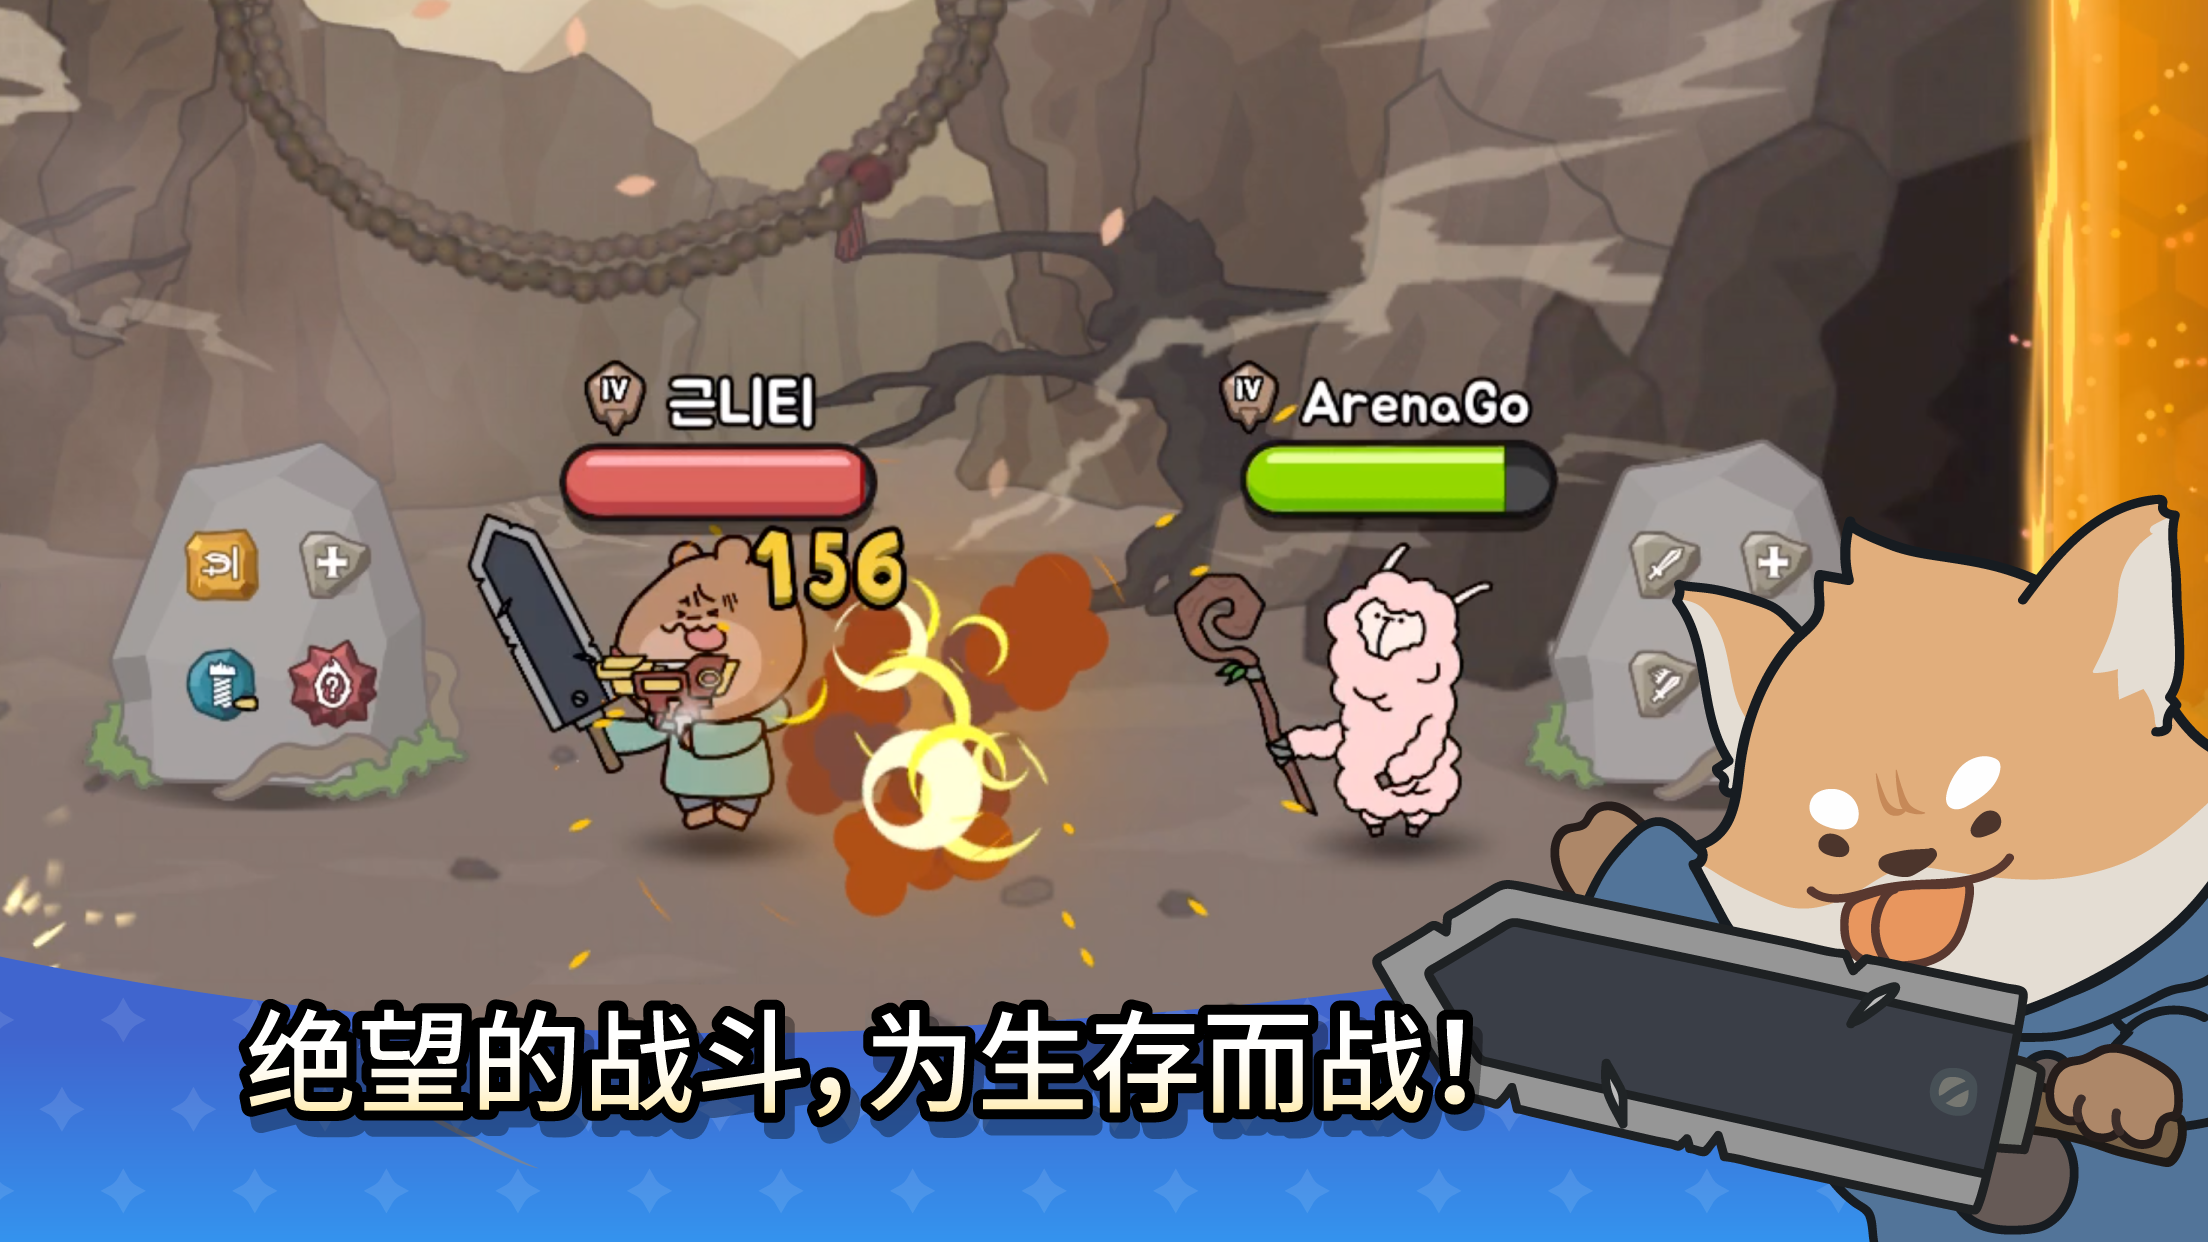 Screenshot 1 of Arena de batalha 2.2.3